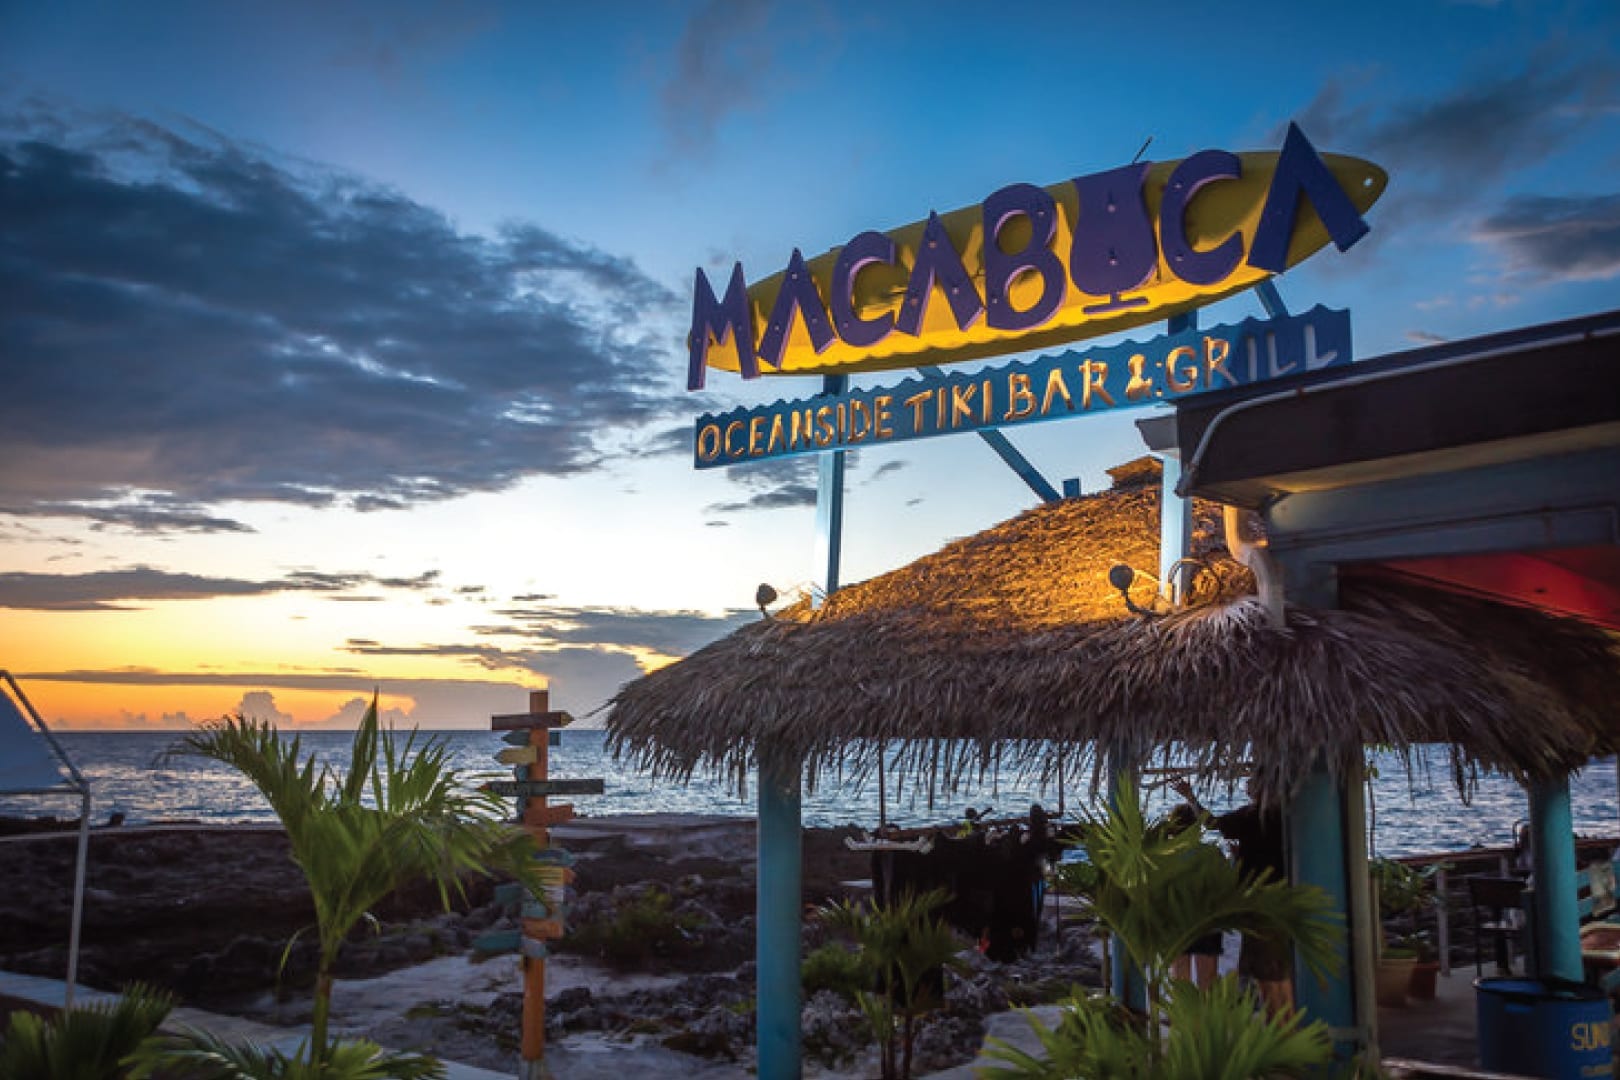 Macabuca Oceanside Tiki Bar & Grill | Cityplugged Cayman